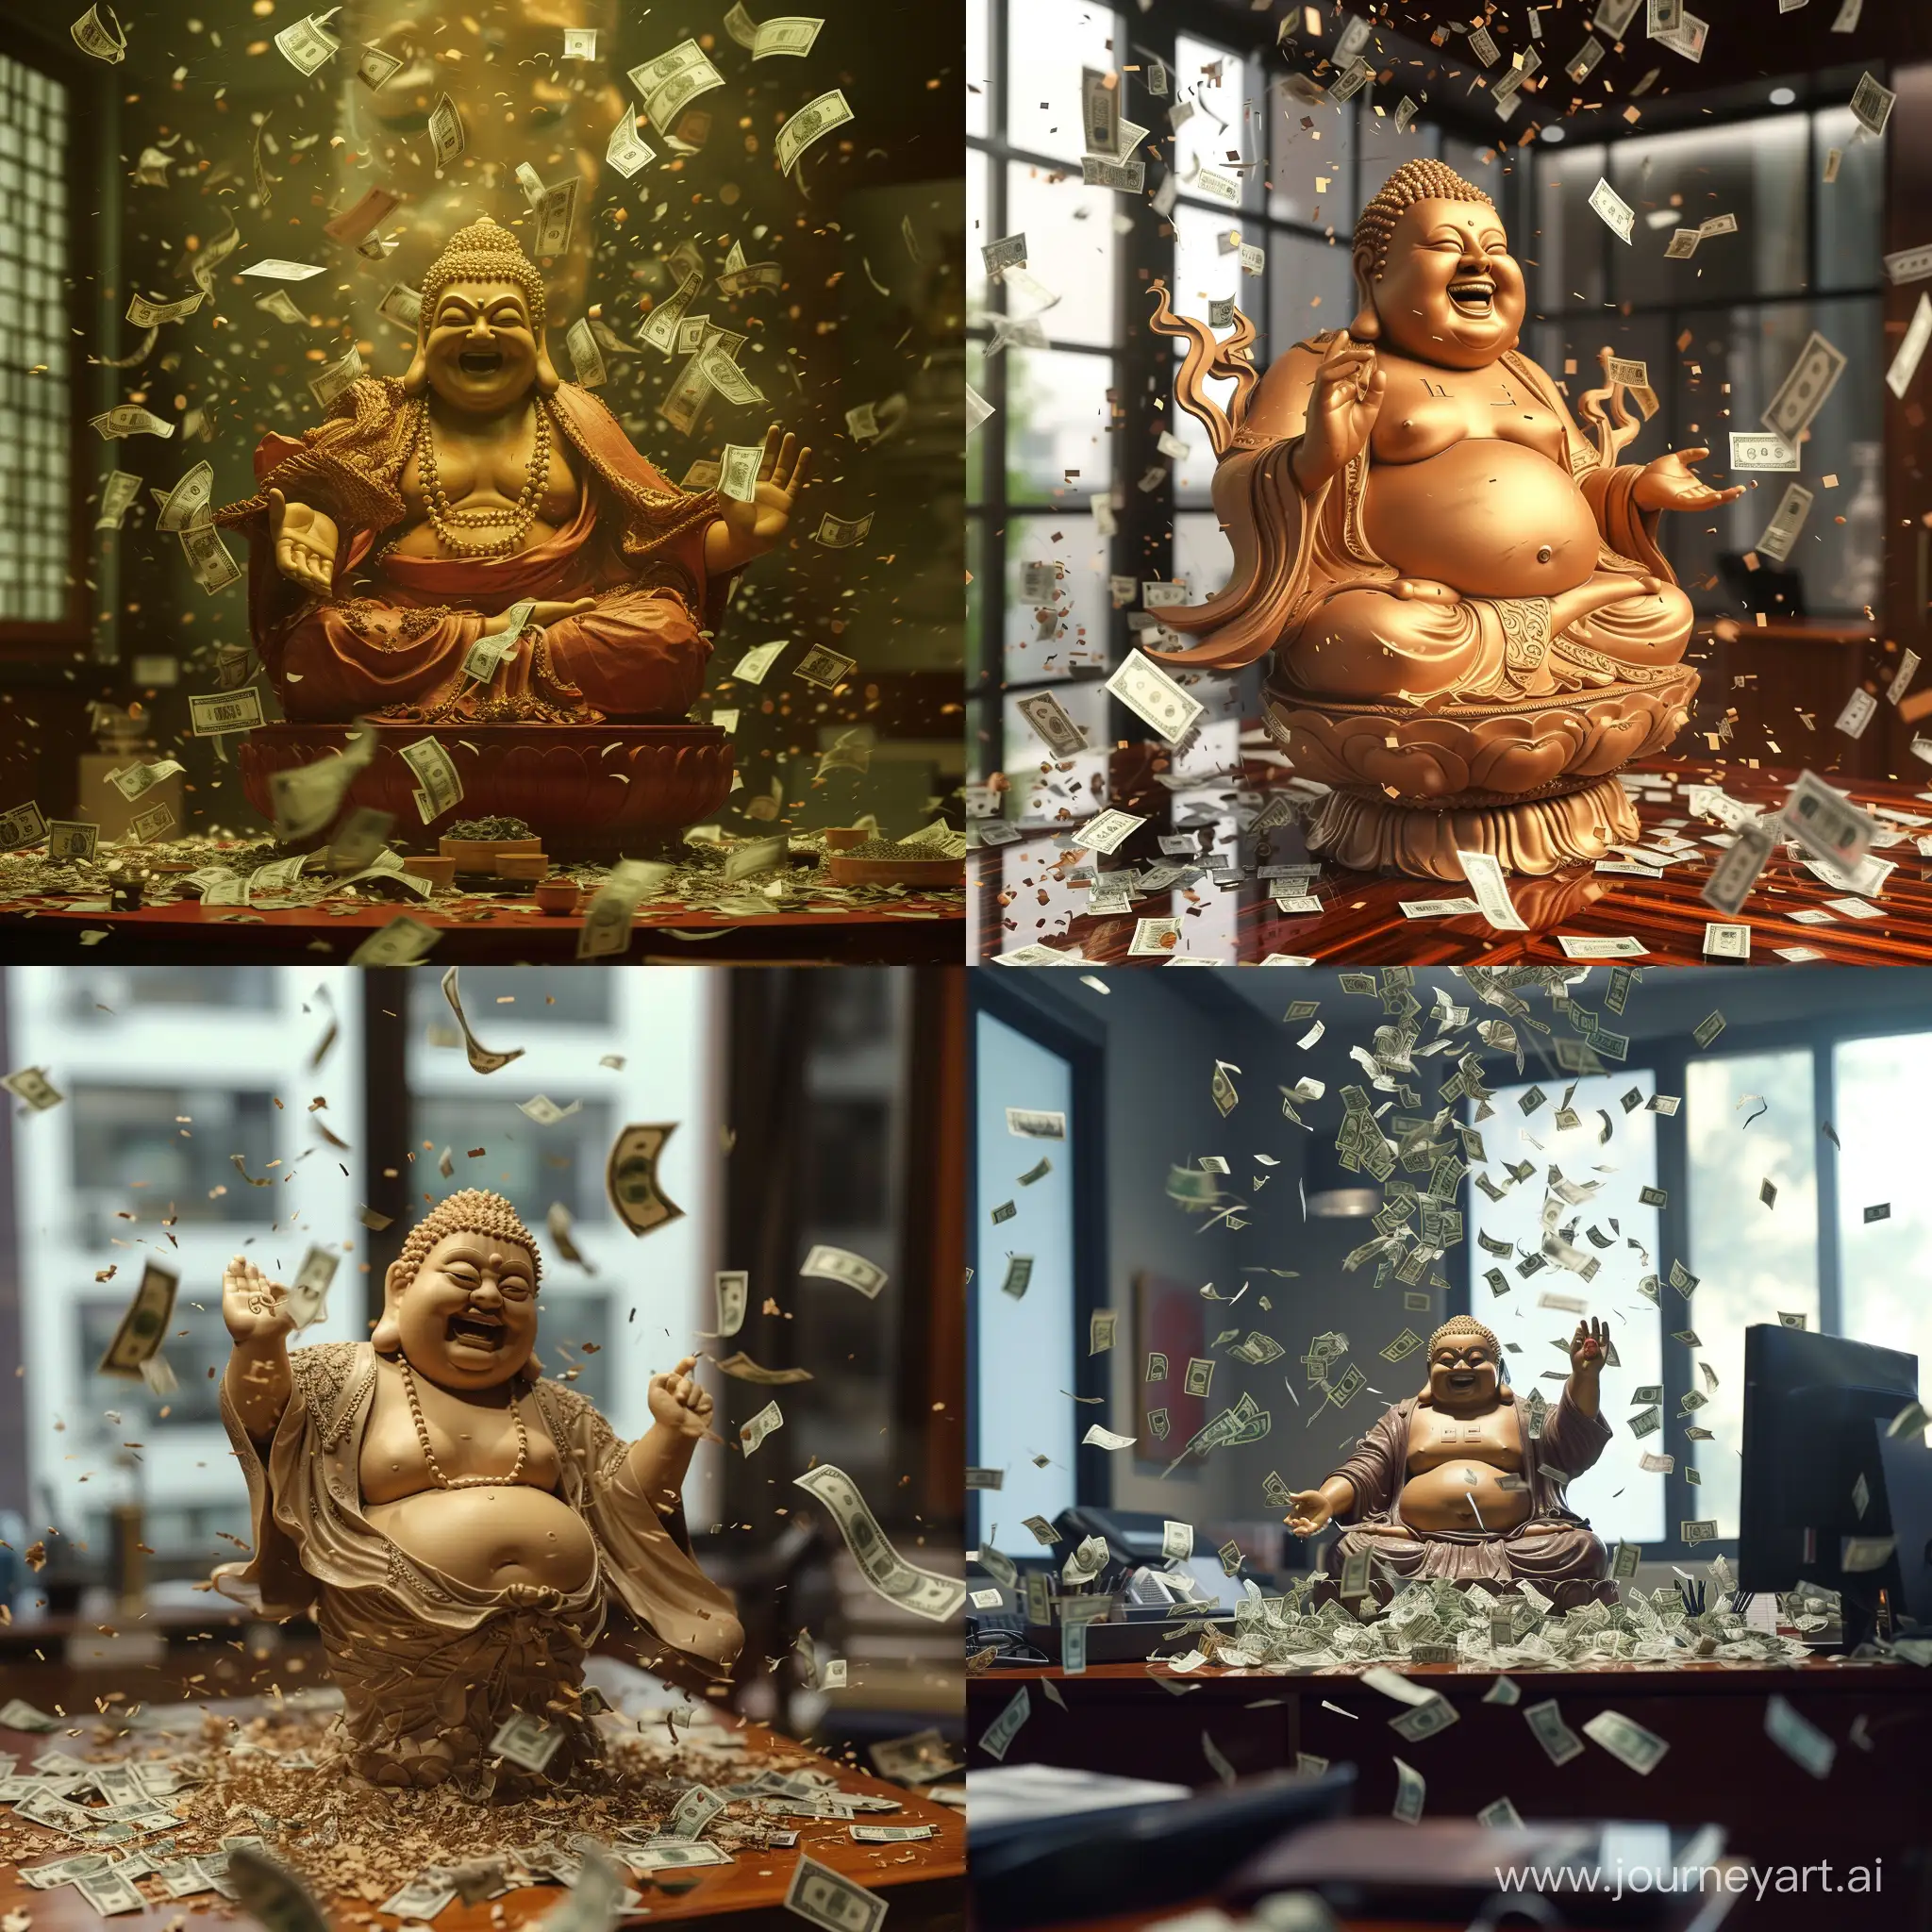 Maitreya Buddha image, loud laughter, money flying everywhere, office scene